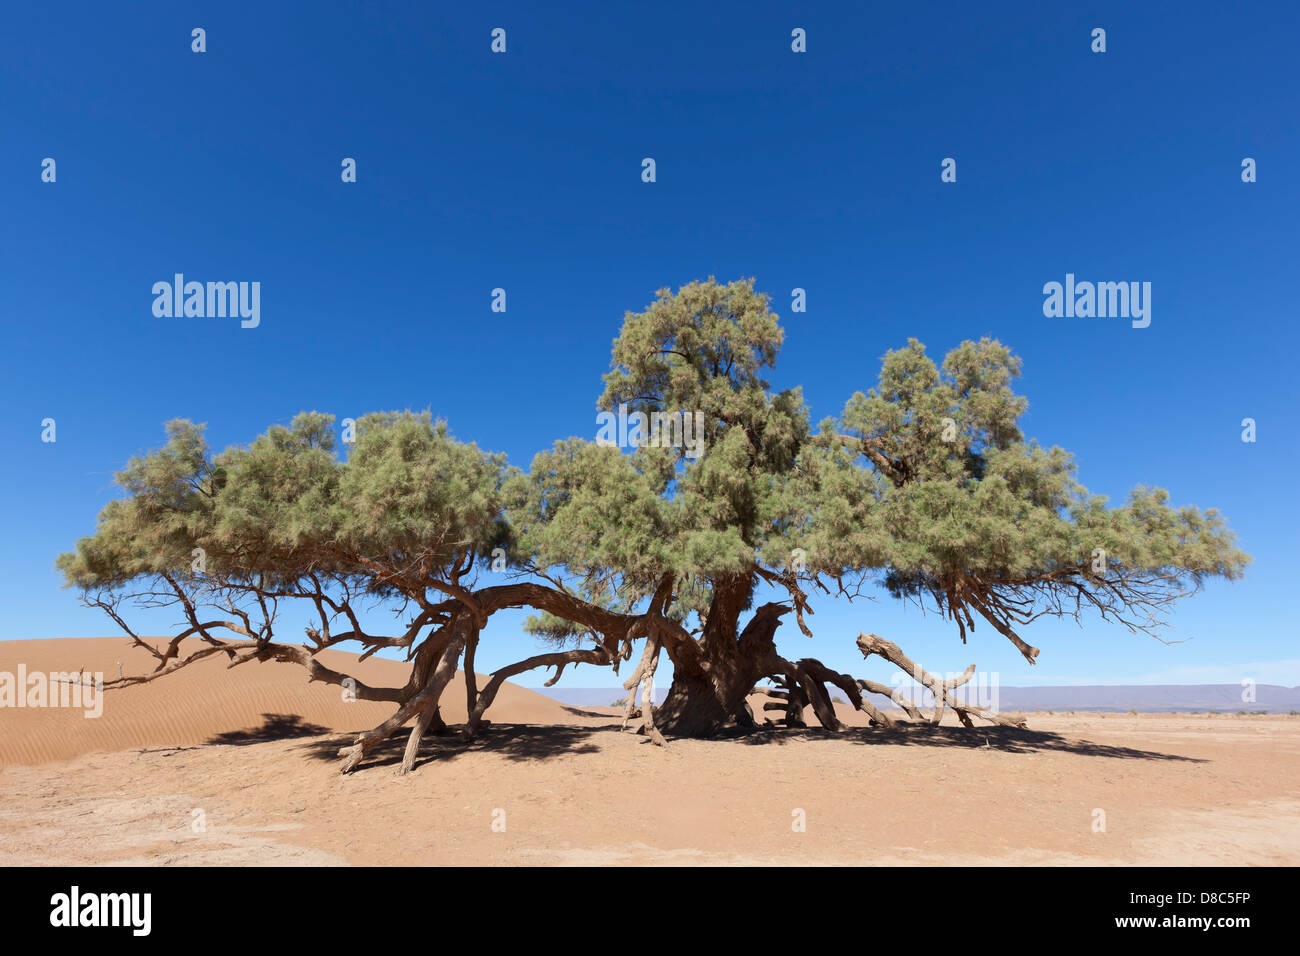 A single Tamarisk tree (Tamarix articulata) in the Sahara desert against clear blue sky. Stock Photo